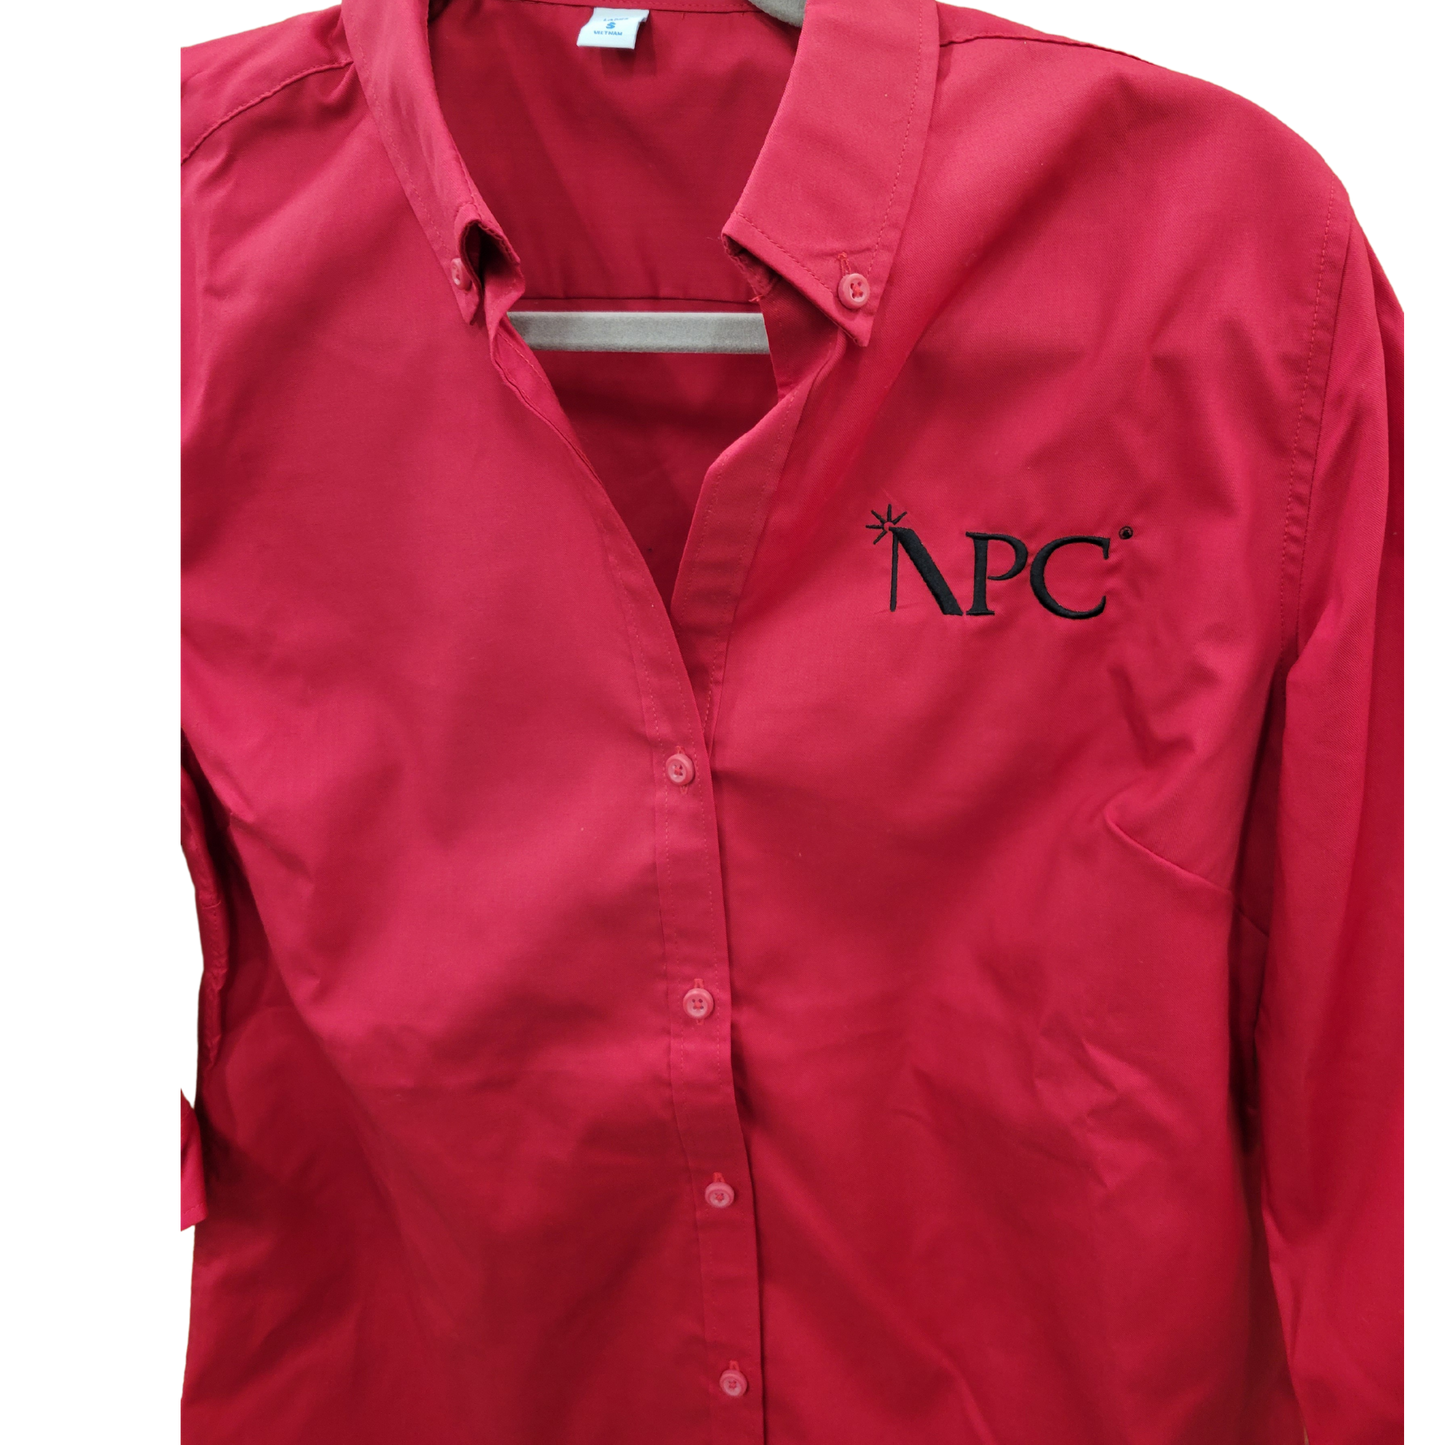 NPC Ladies Dress Shirt